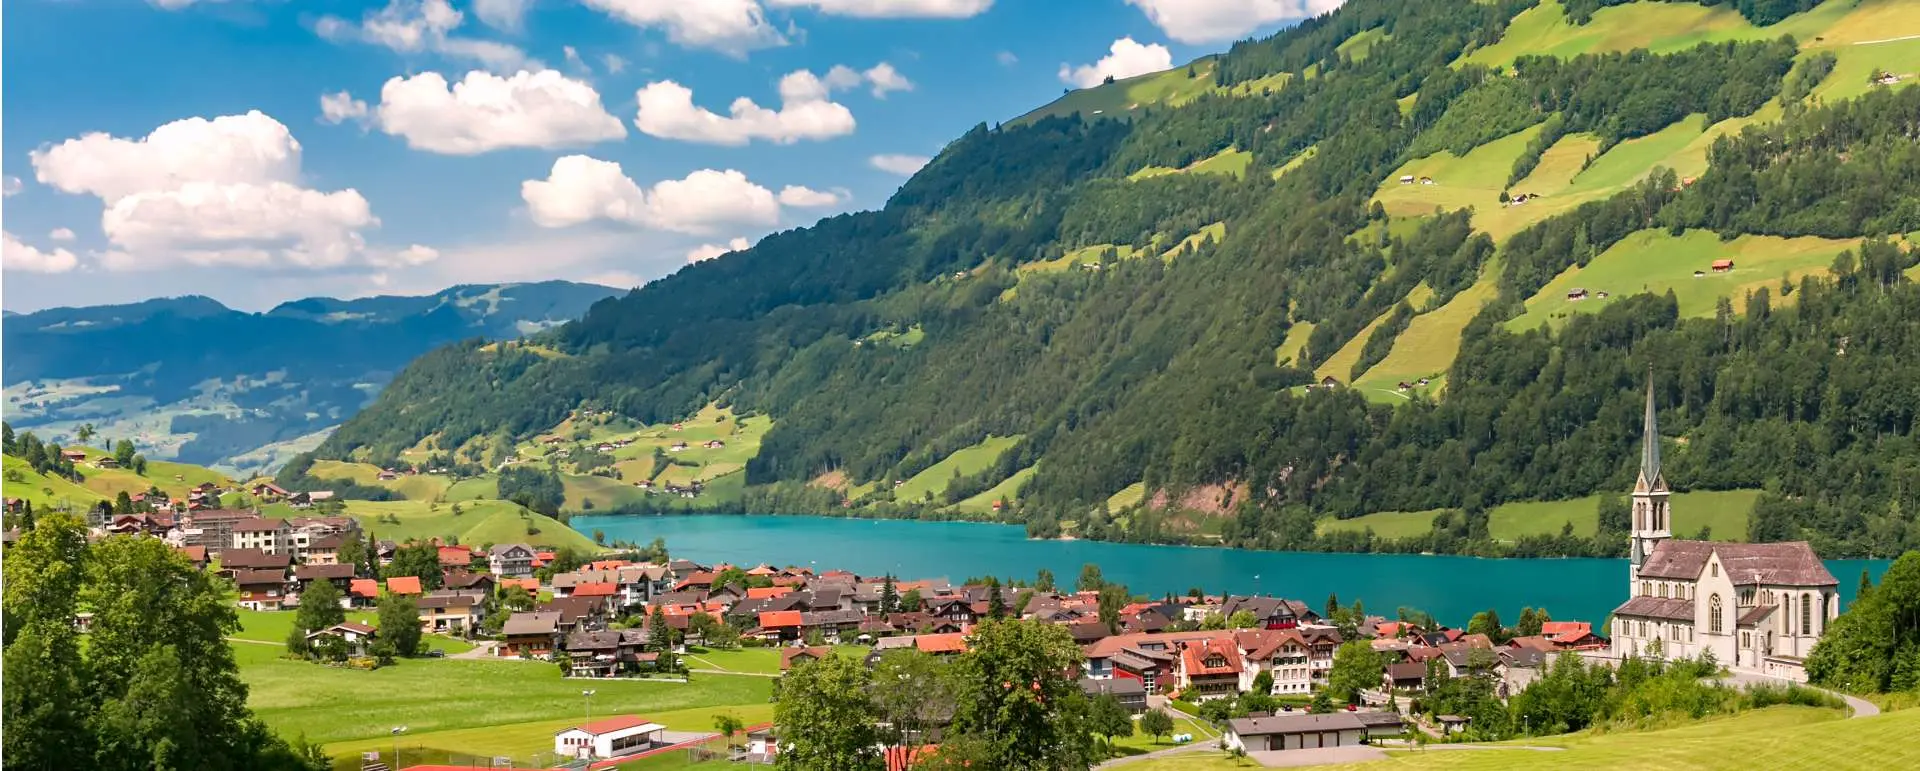 Obwalden - the destination for group trips